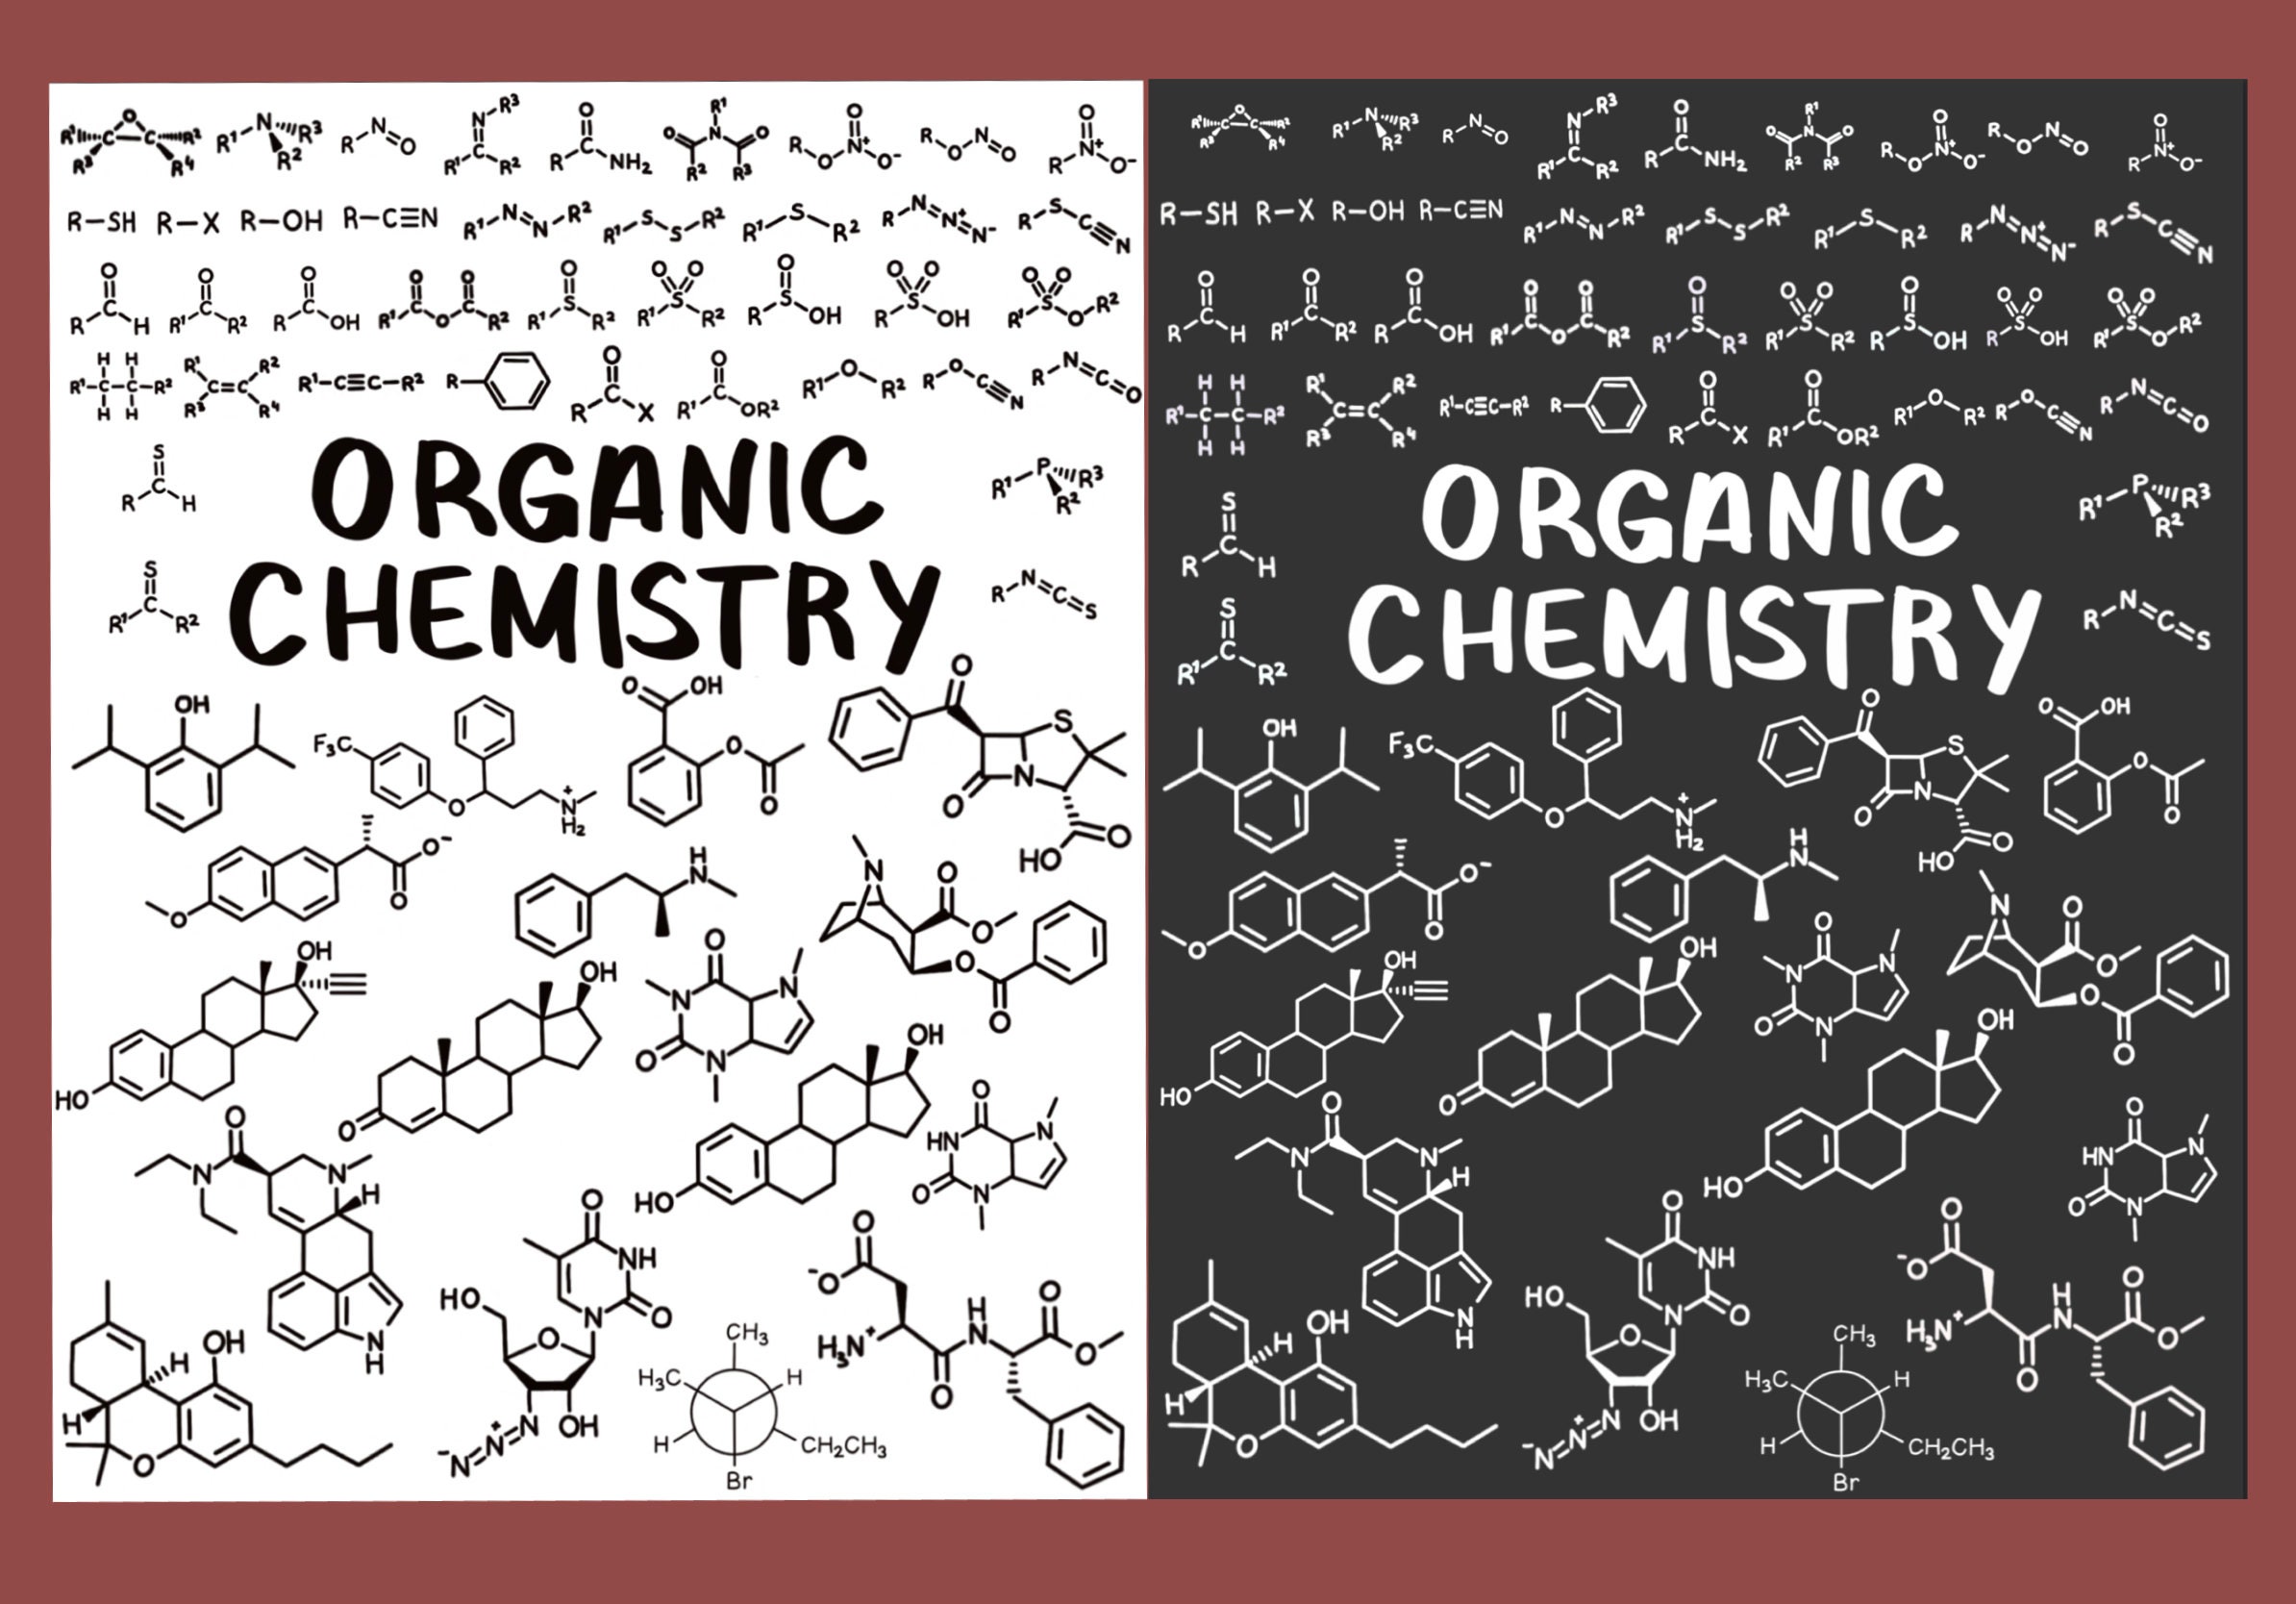 Organic Chemistry Stencil Template PRE-CROPPED Digital Stickers